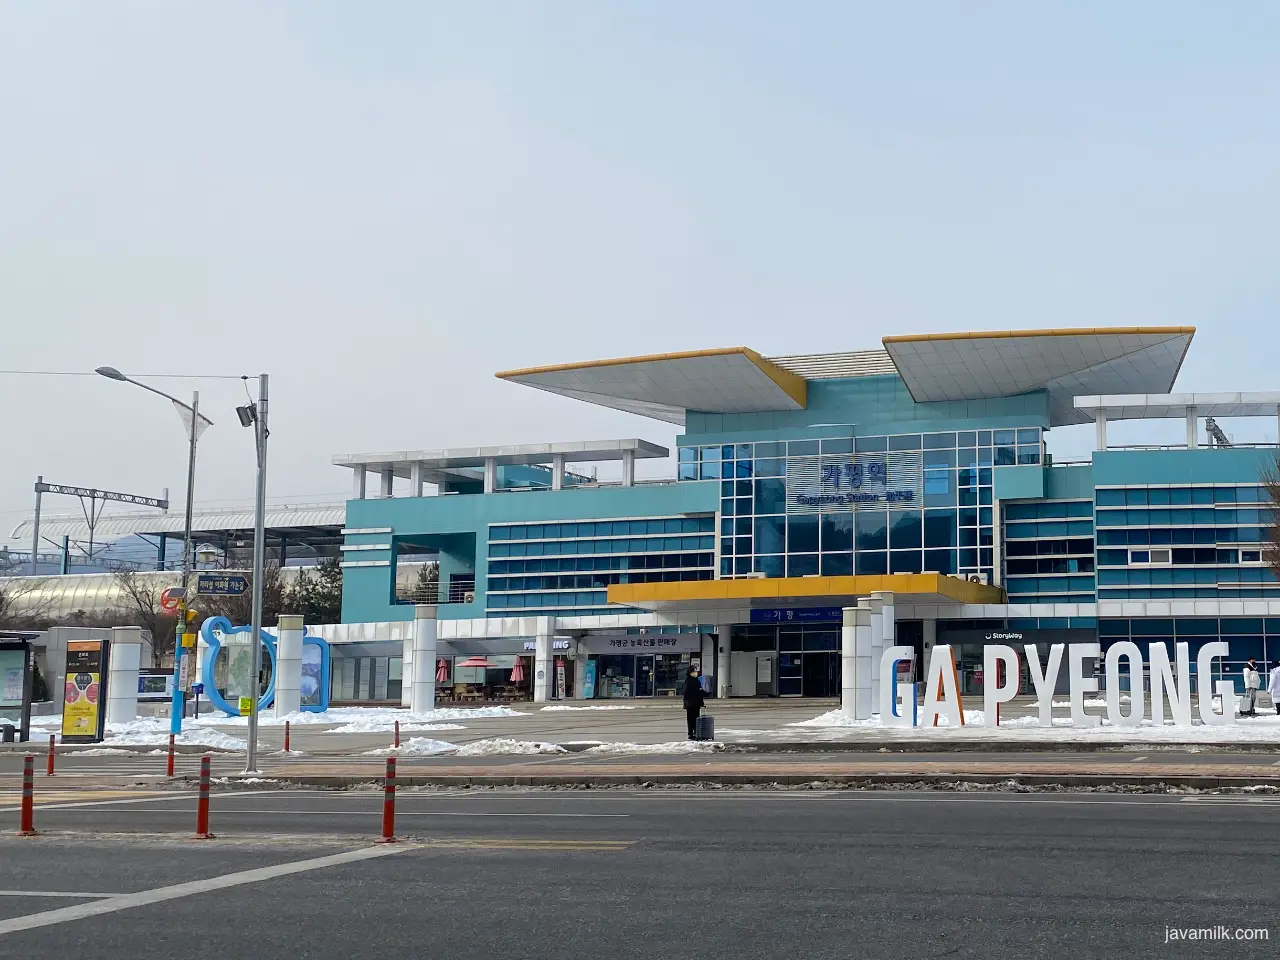 Gapyeong Station